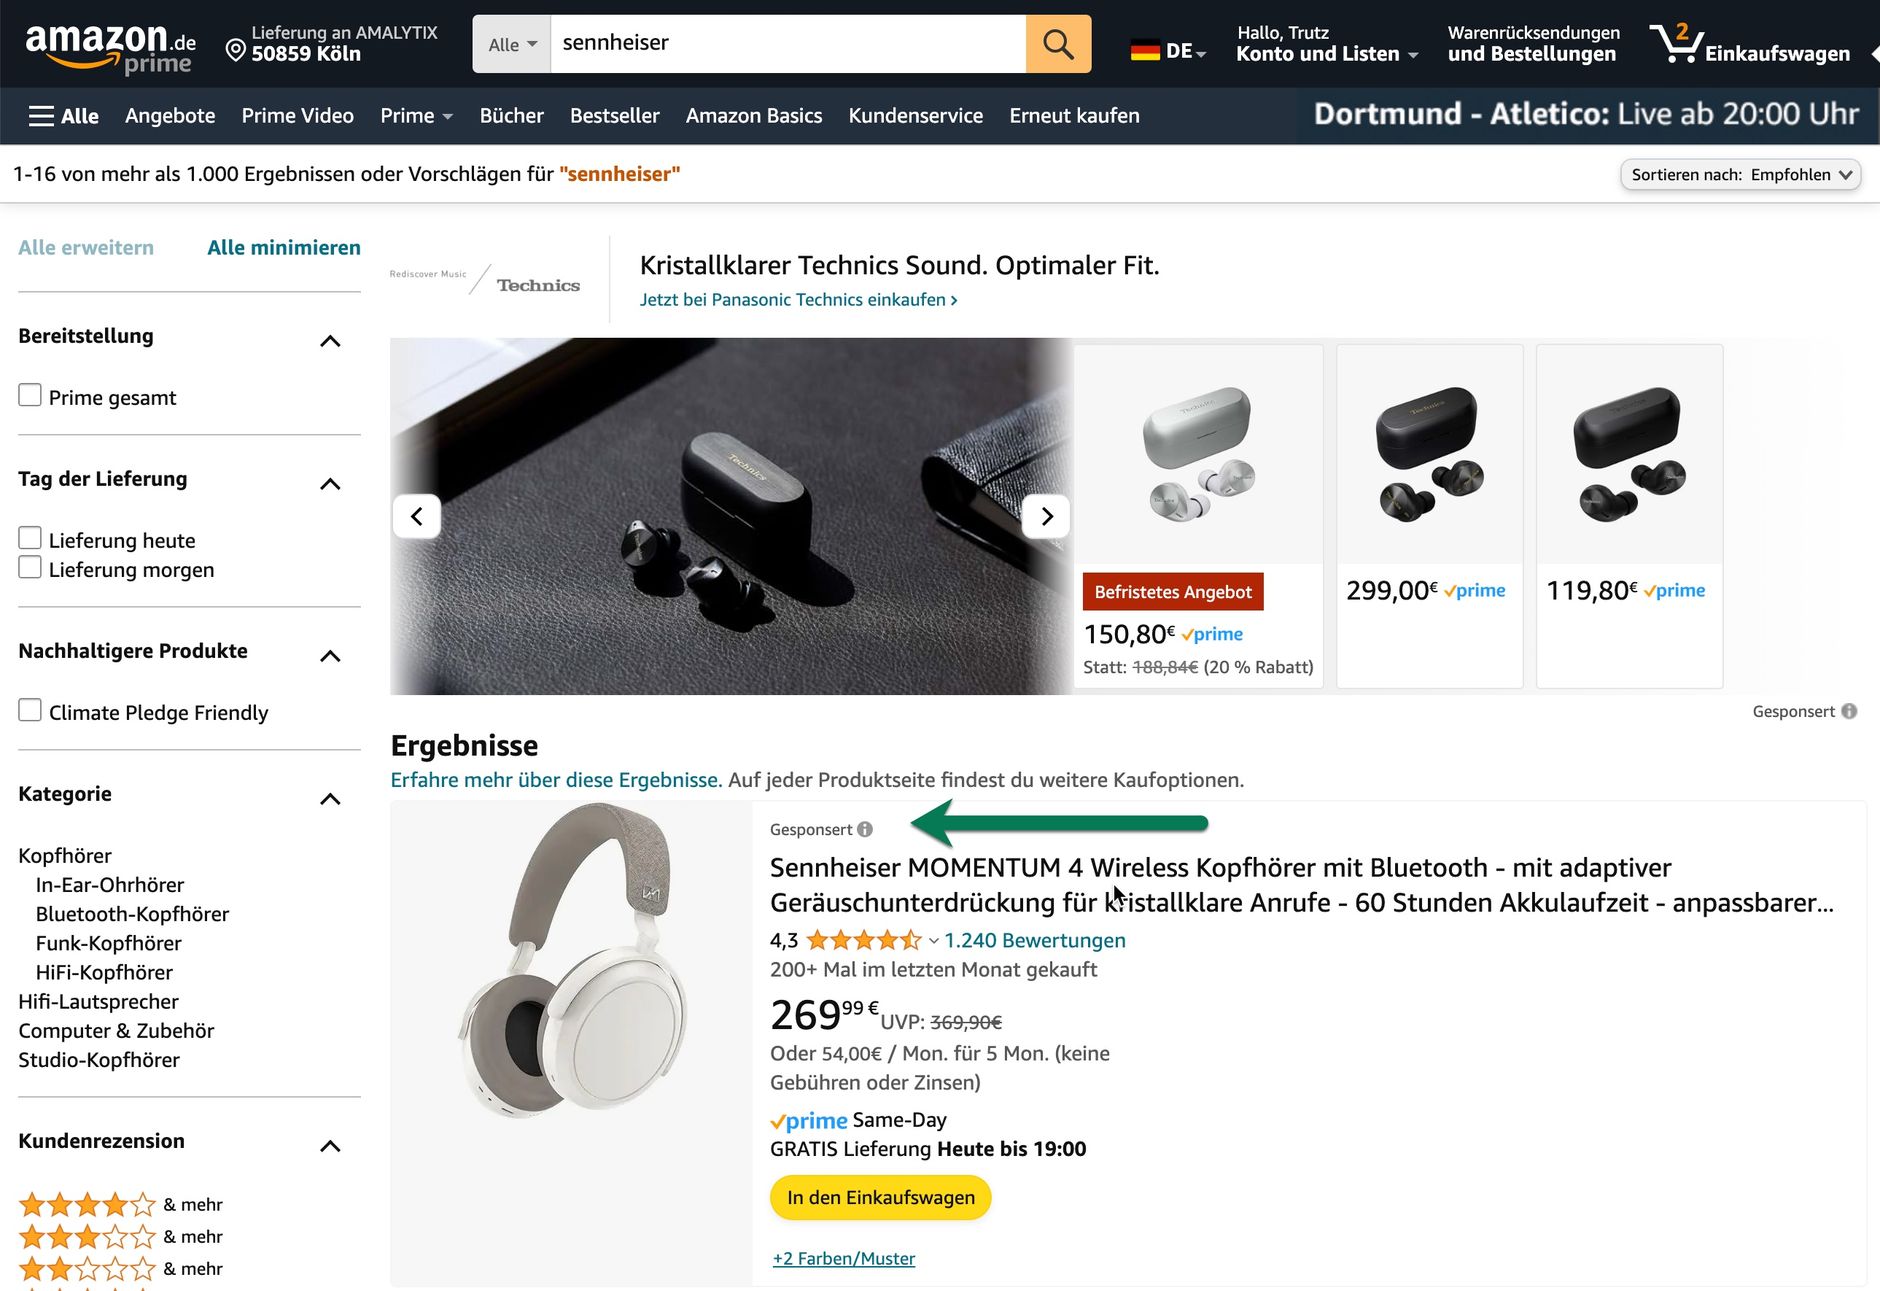 Sponsored Products am Beispiel Amazon